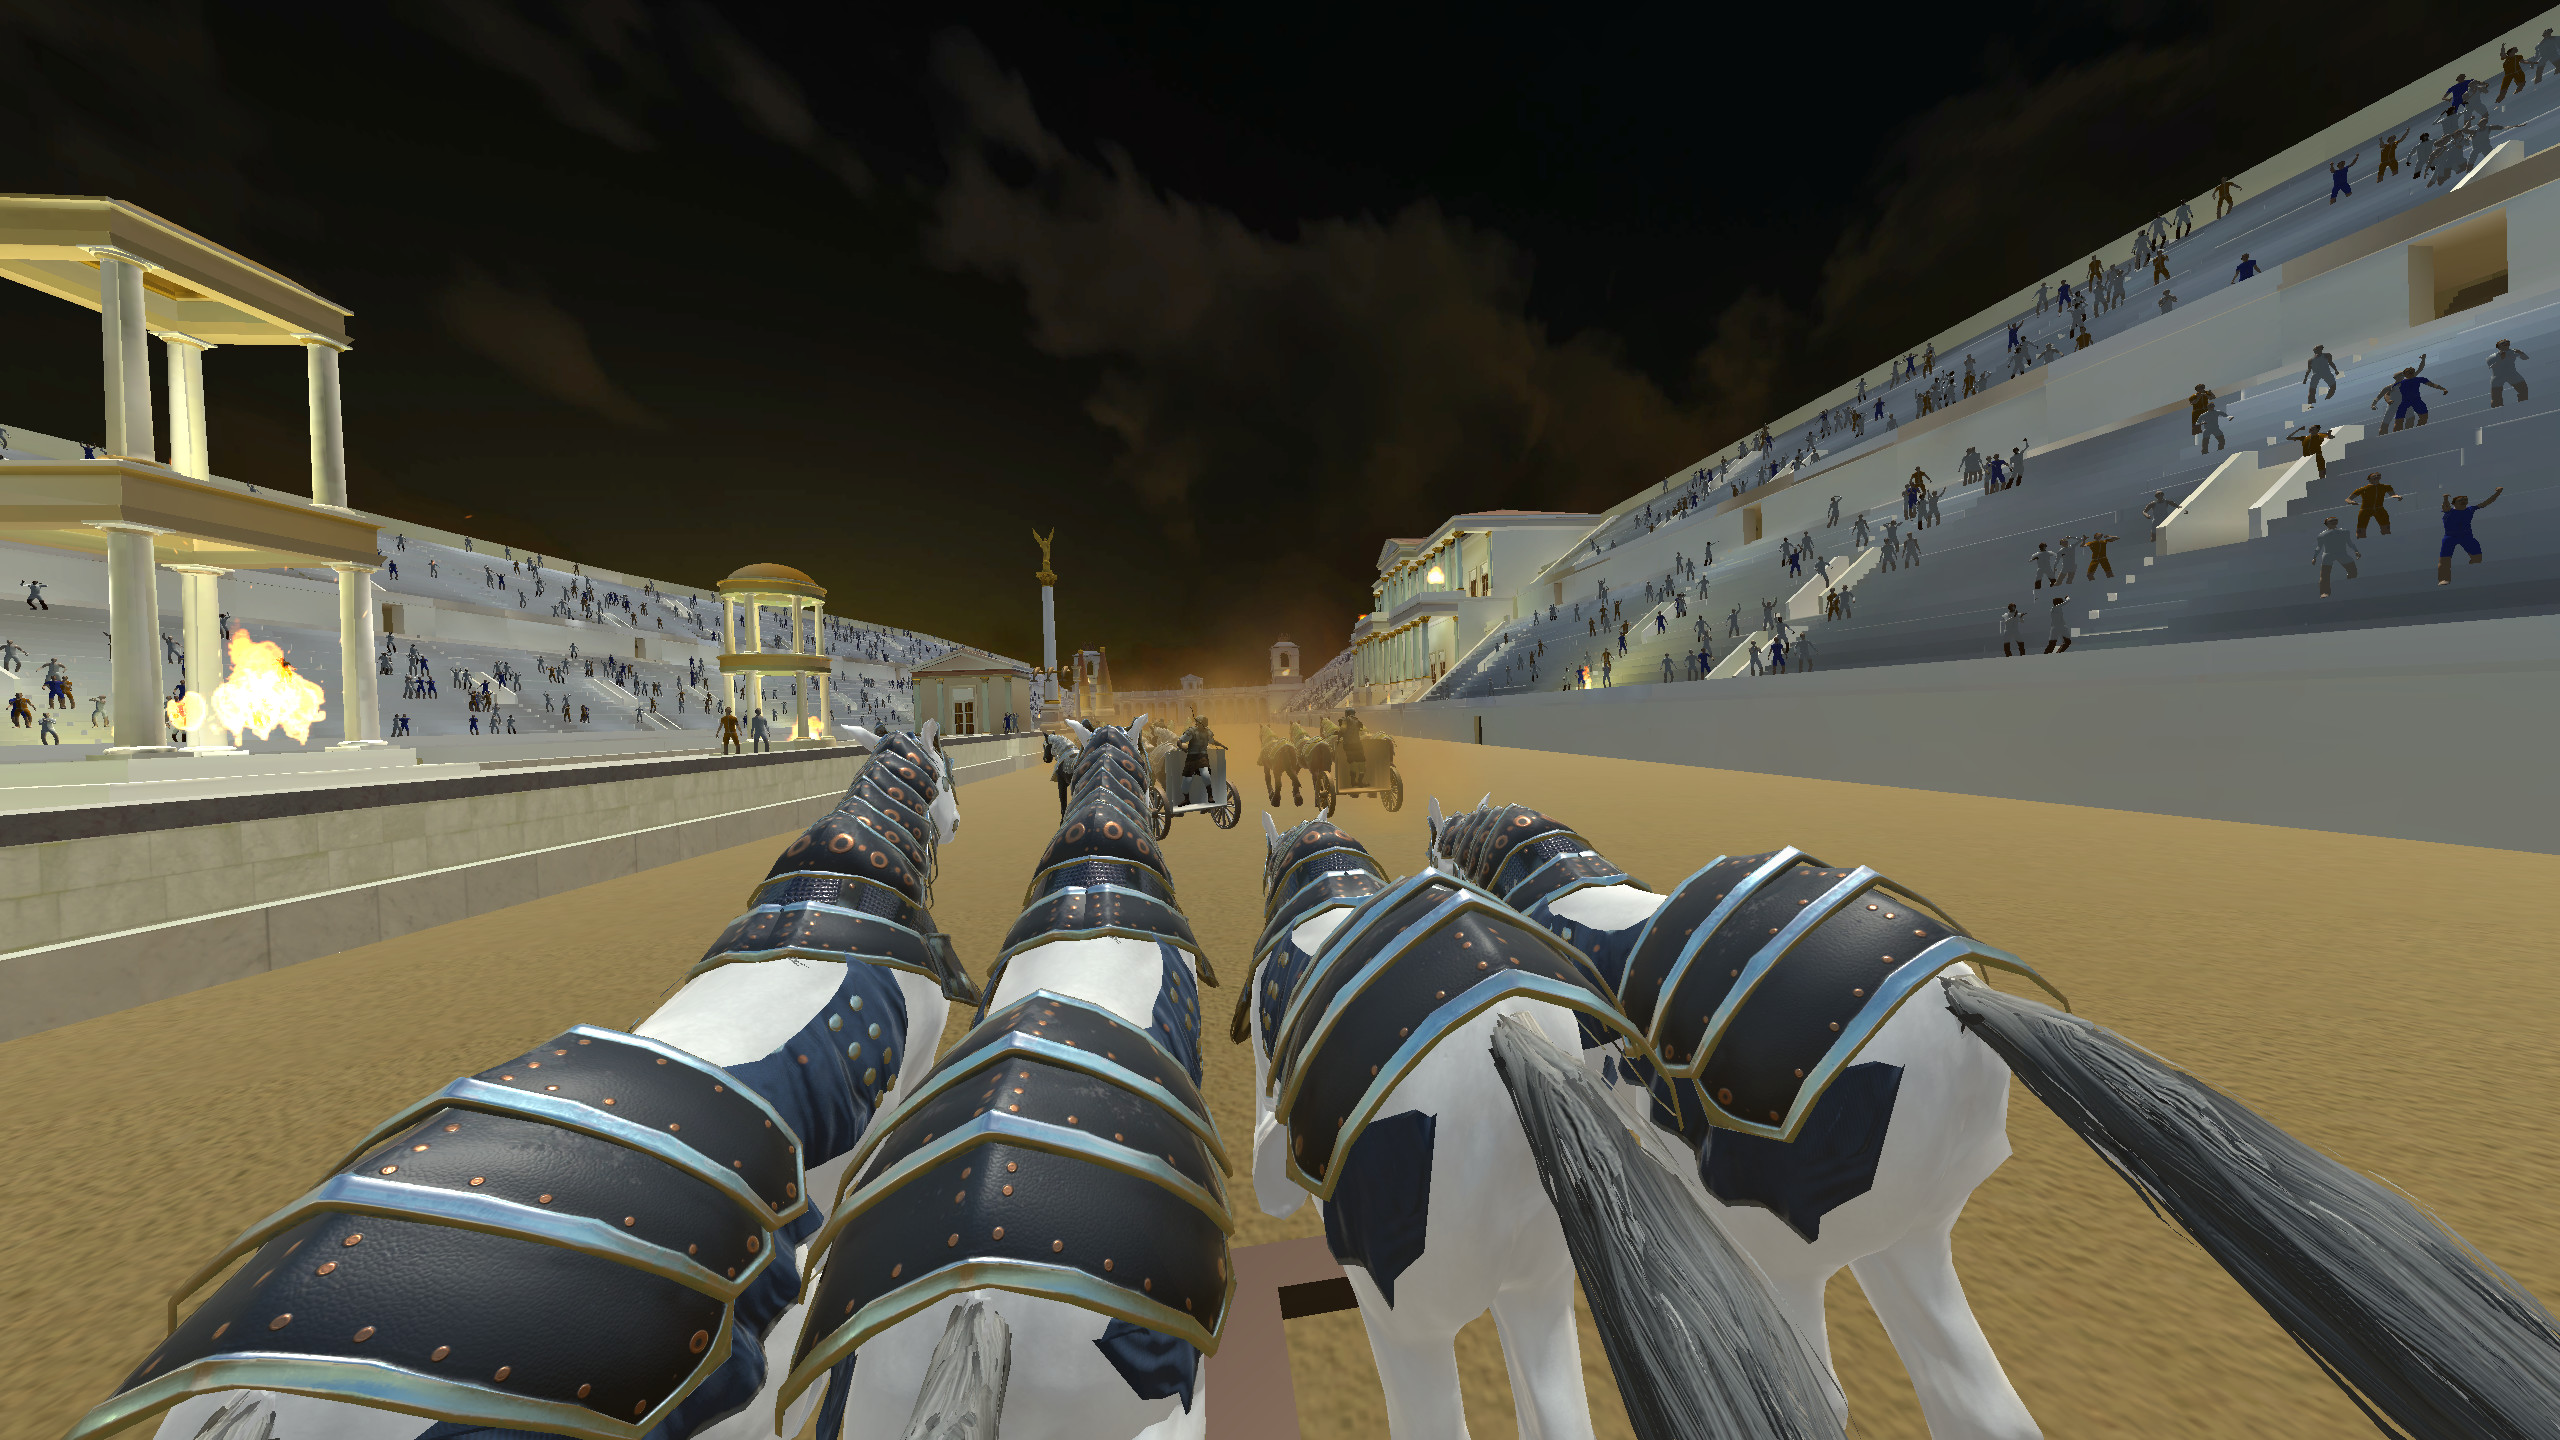 Rome Circus Maximus: Chariot Race VR screenshot